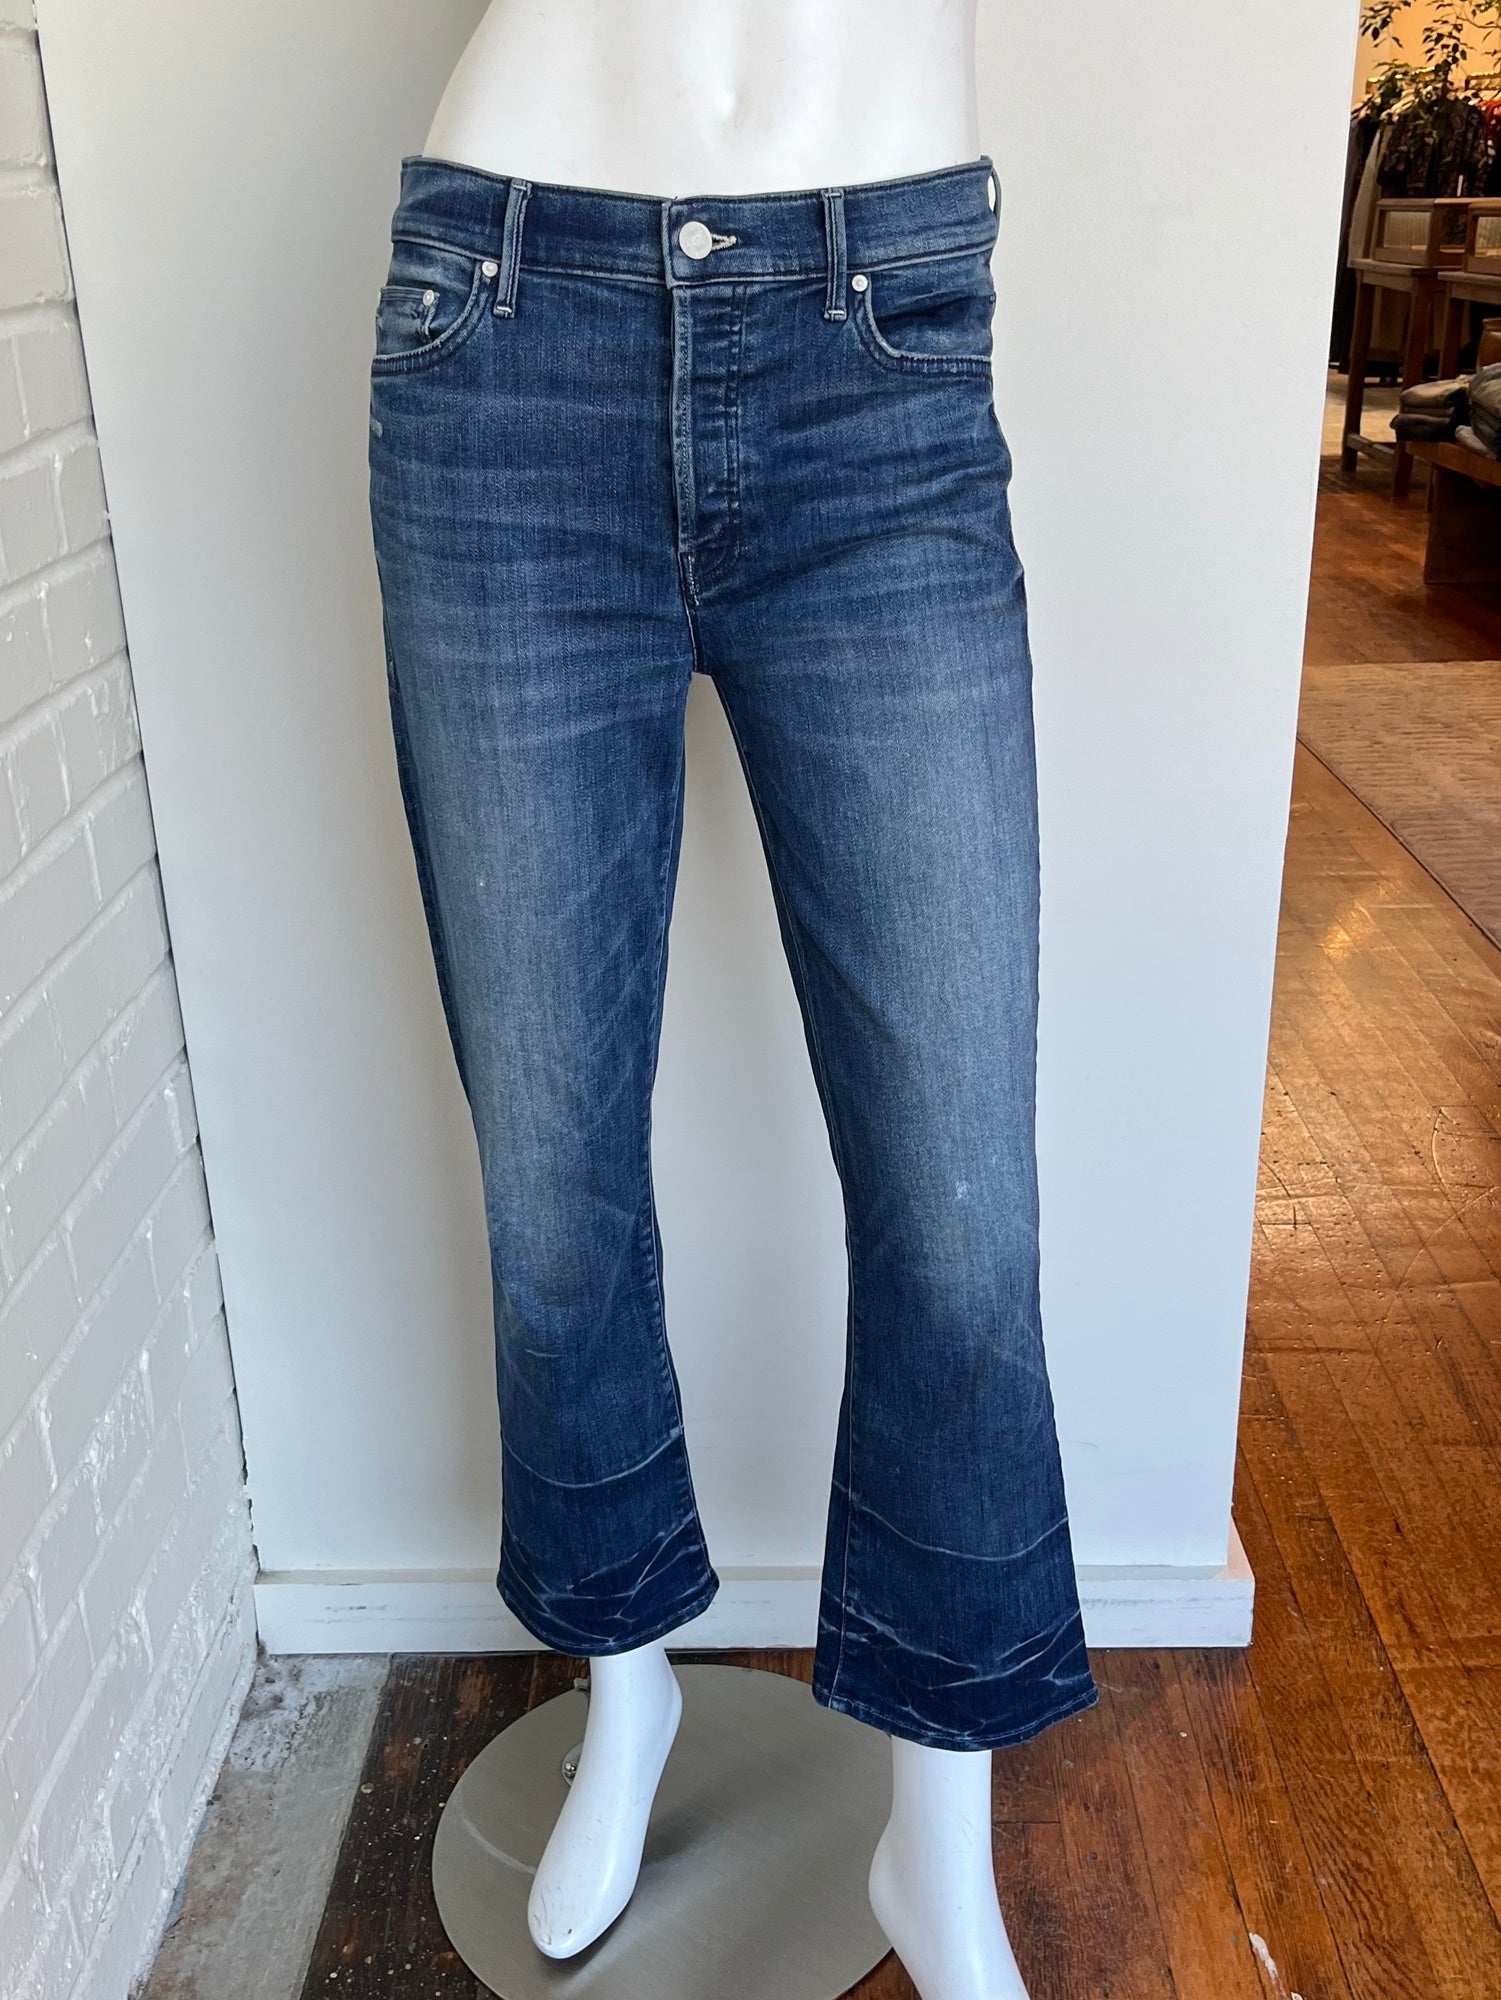 Button Insider Crop Jeans Size 29